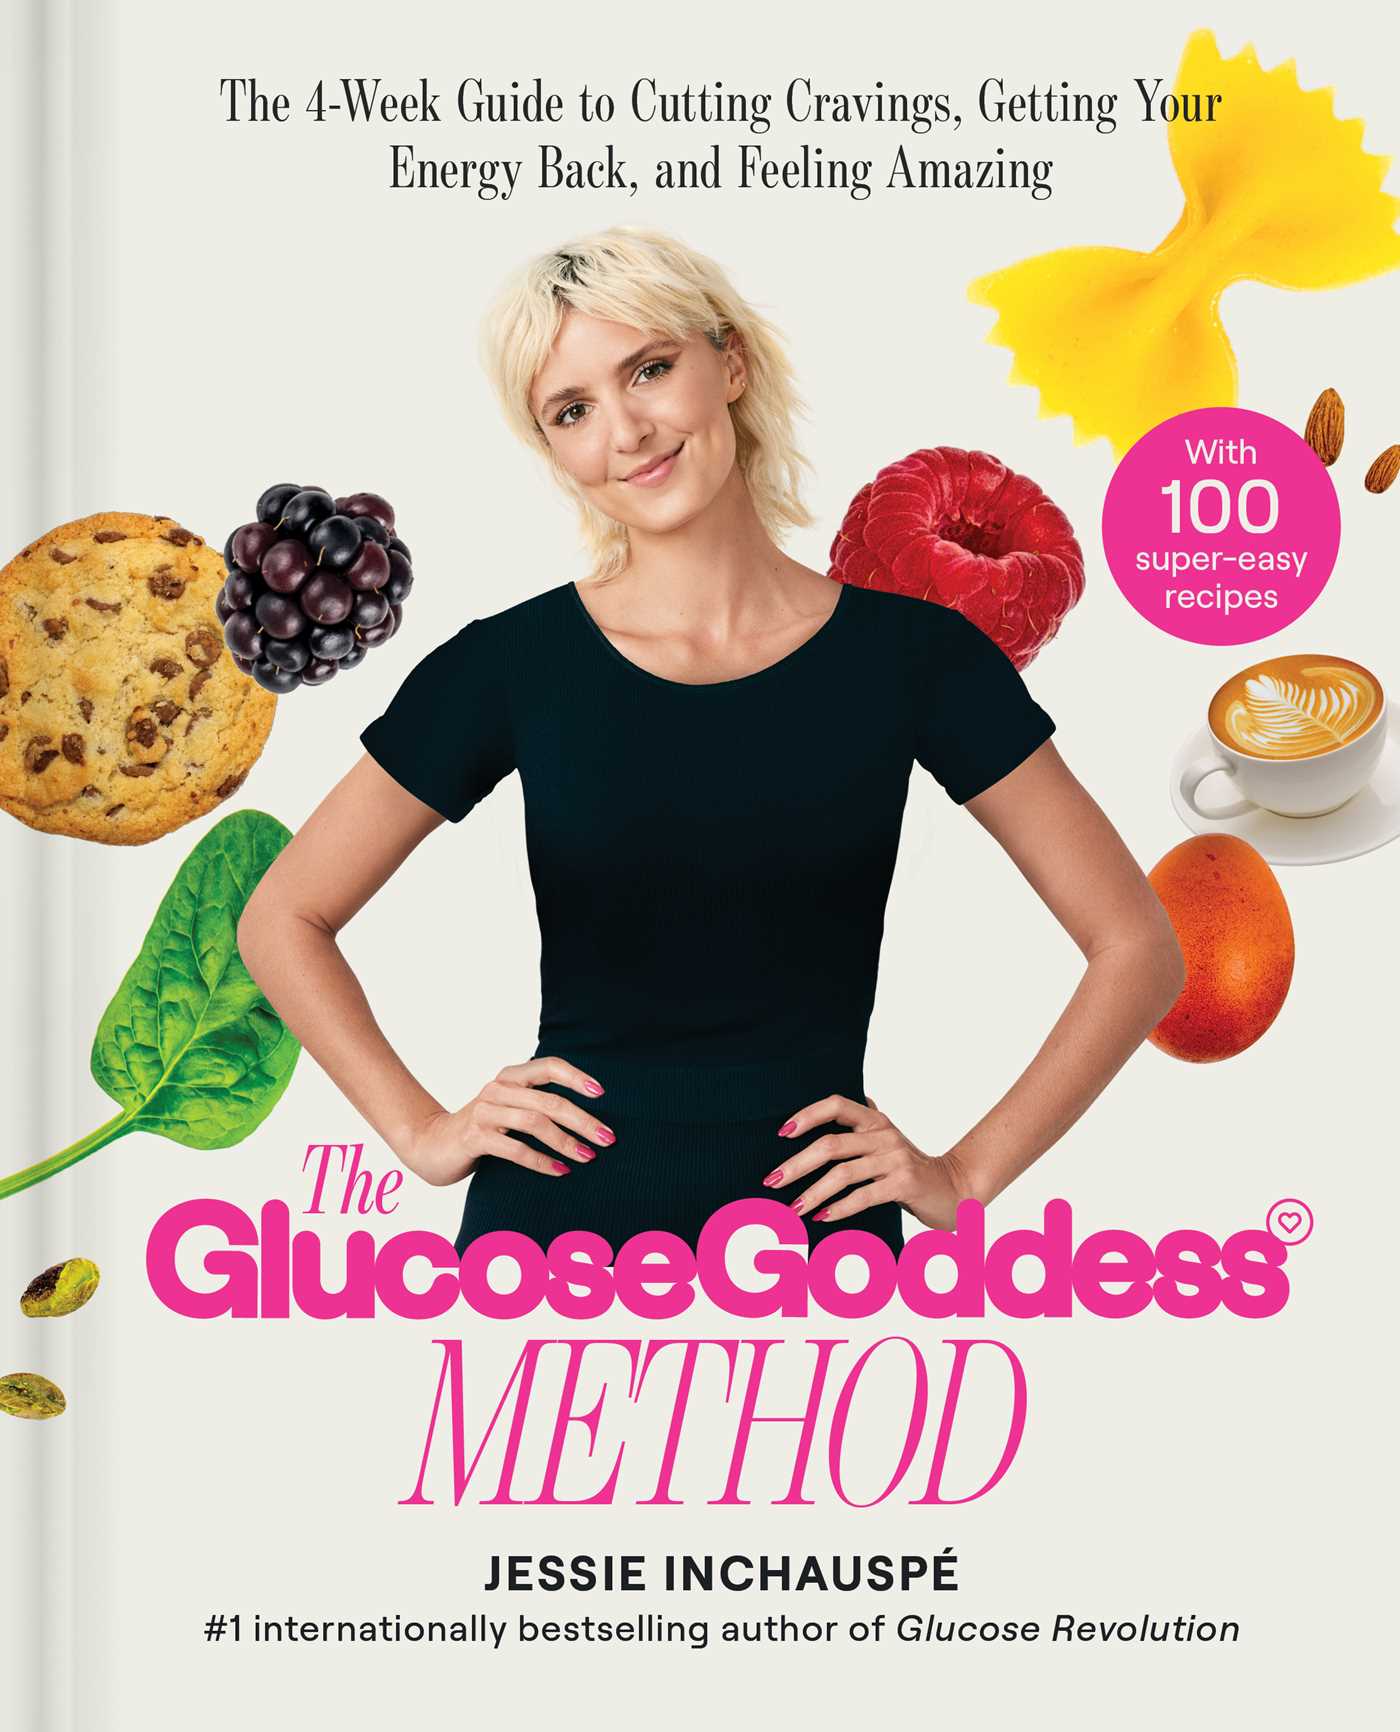 Image for "The Glucose Goddess Method"